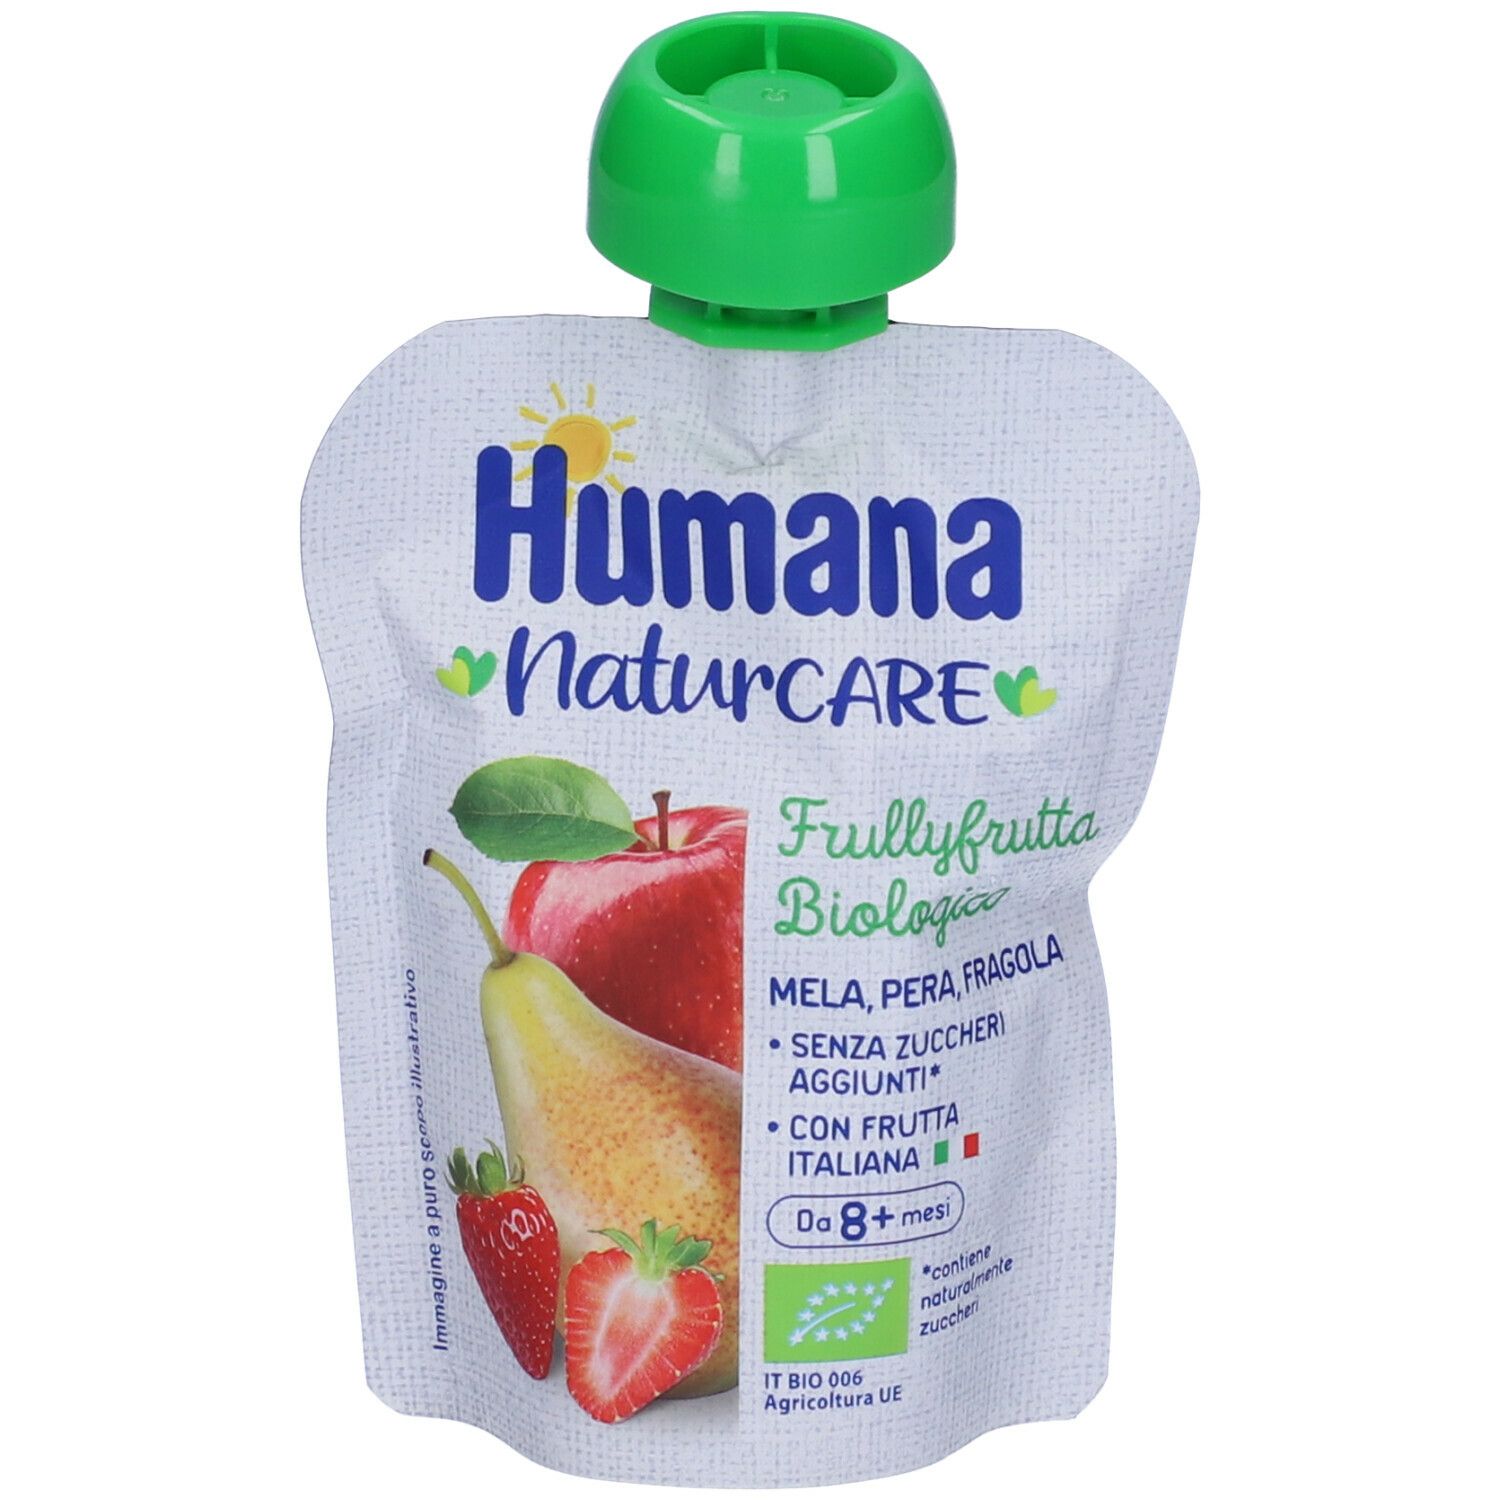 Image of Humana frullyfrutta mela, pera, fragola